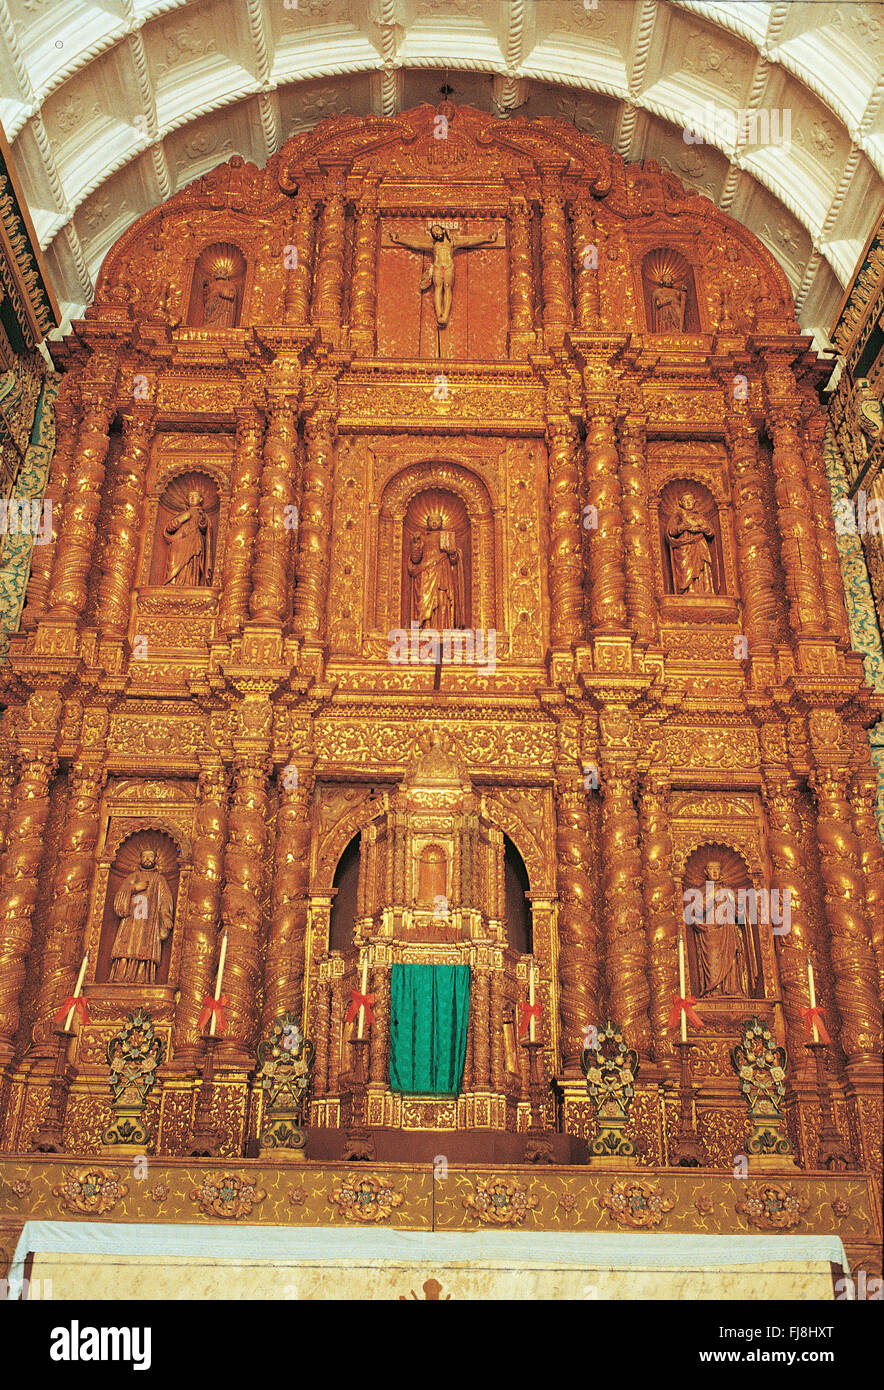 Alter rachol seminary chiesa, Goa, India, Asia Foto Stock